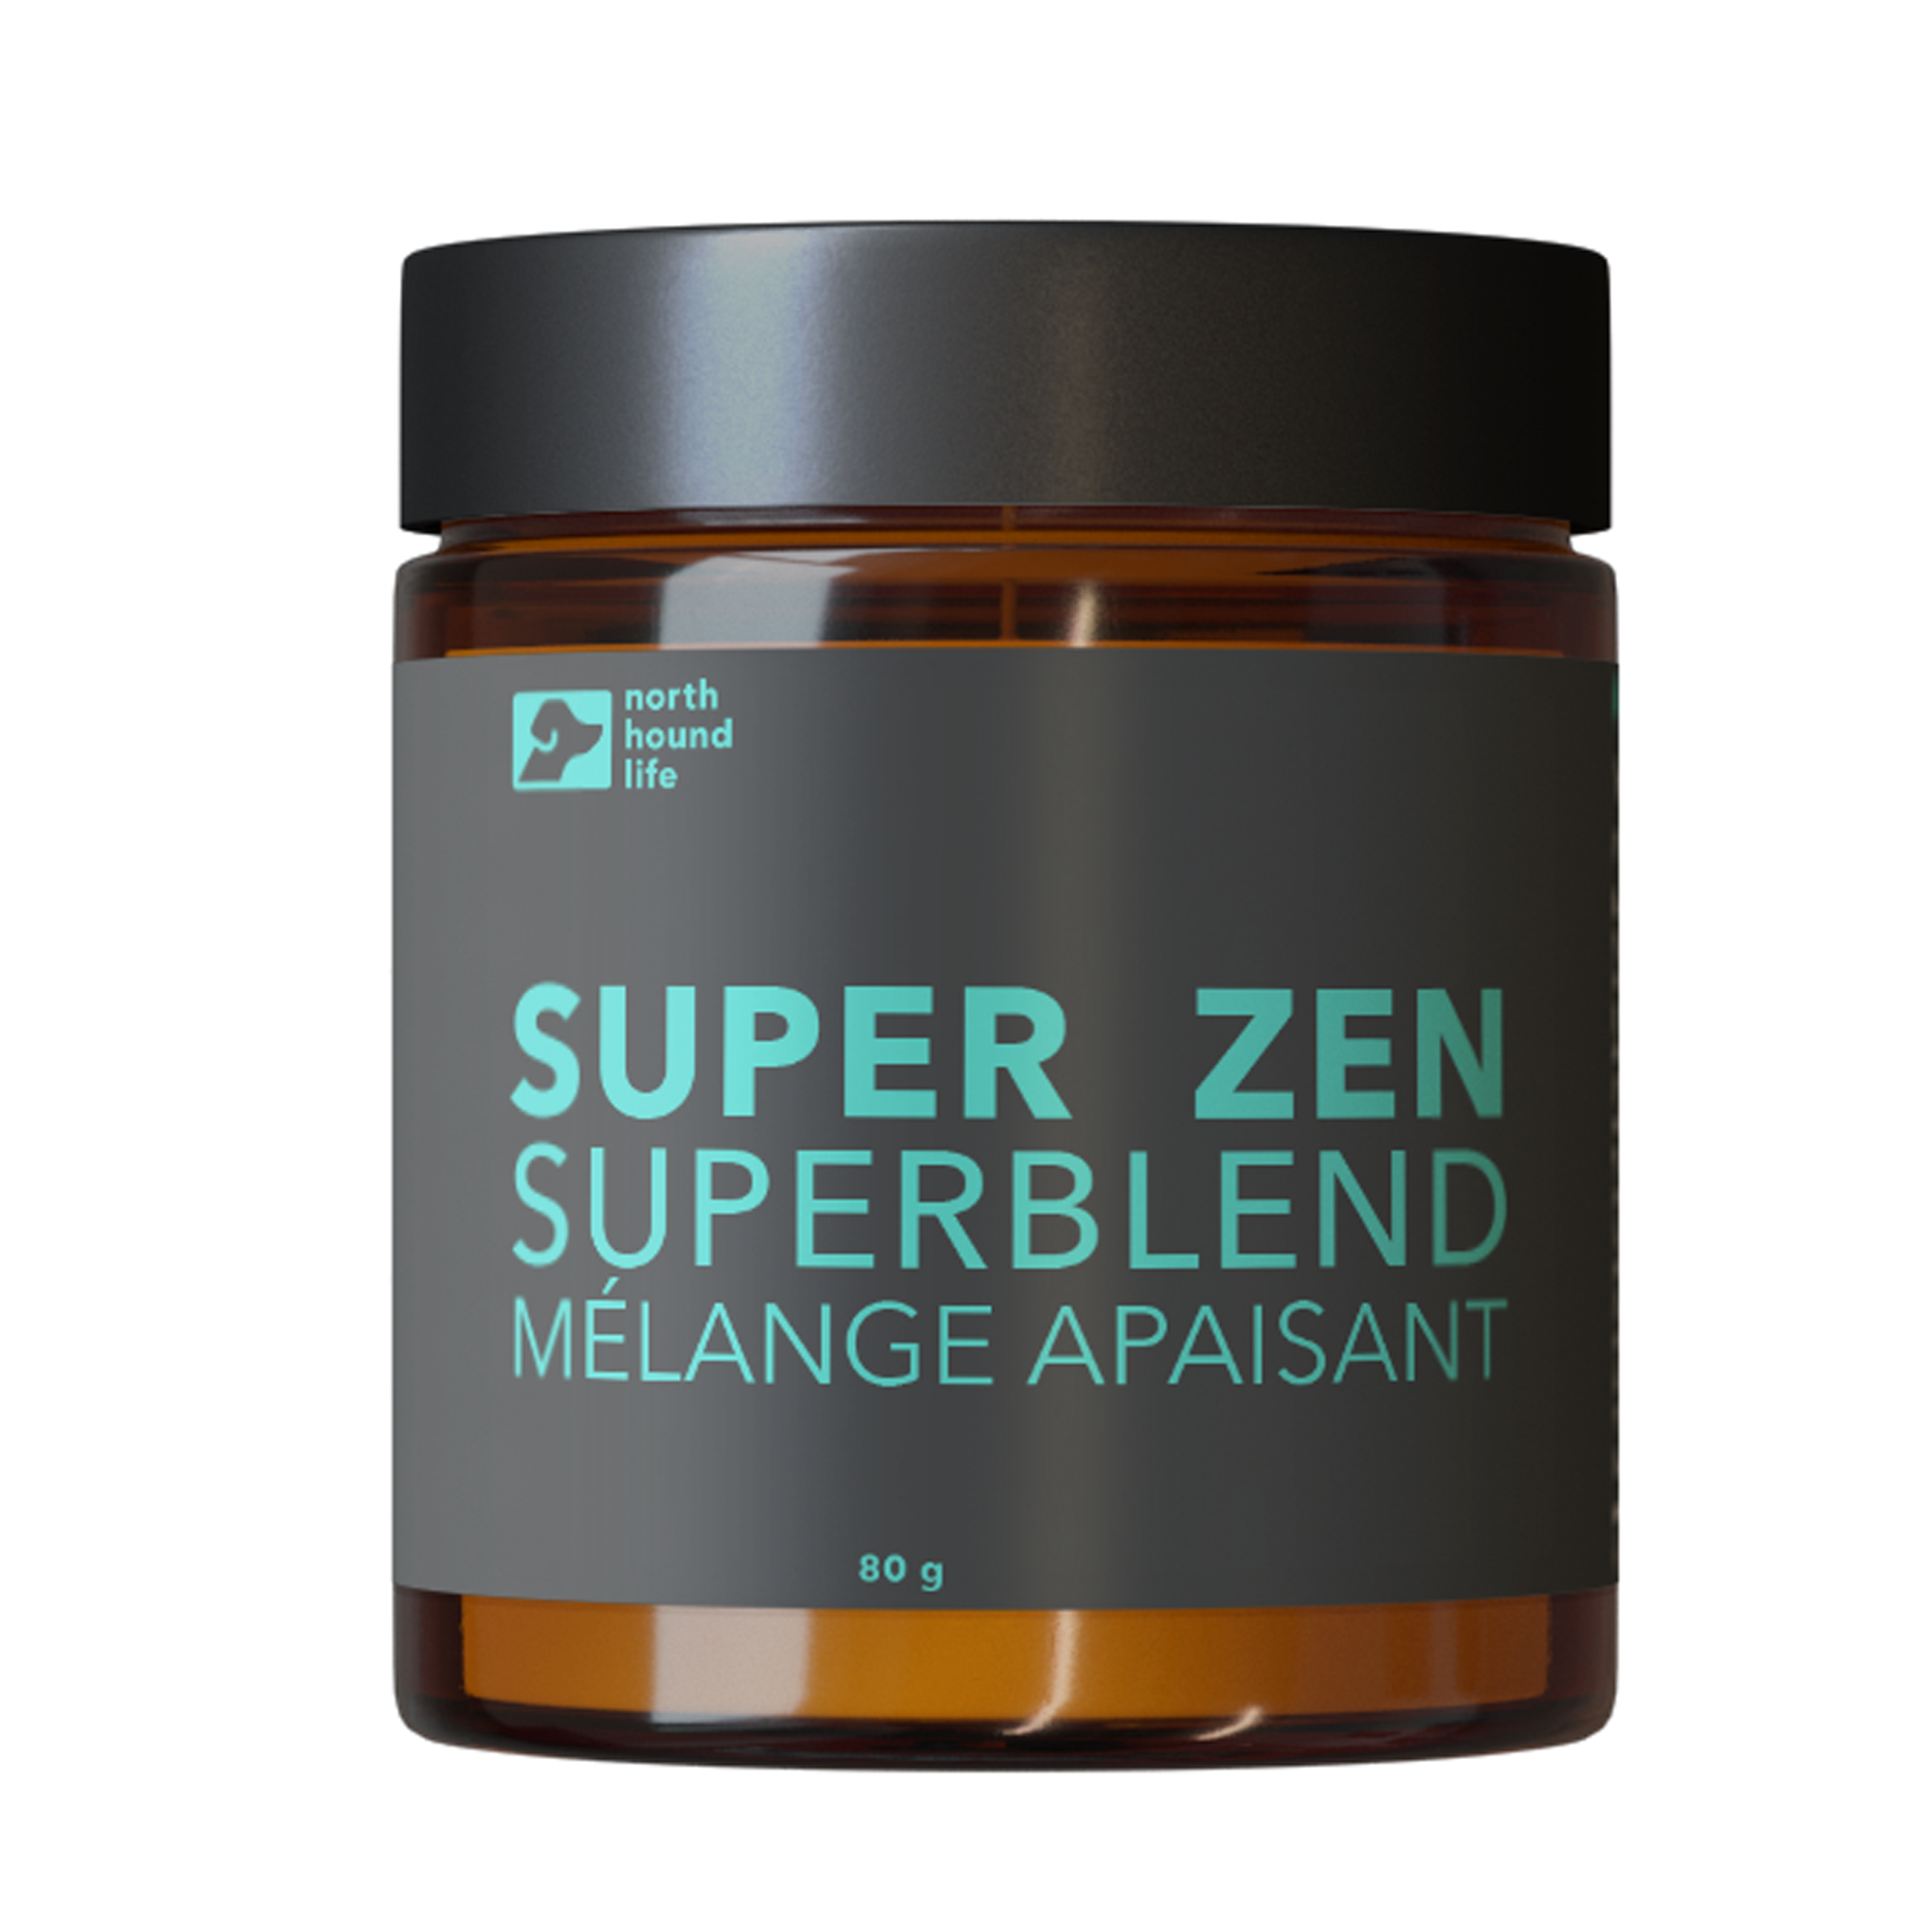 Super Zen Superblend